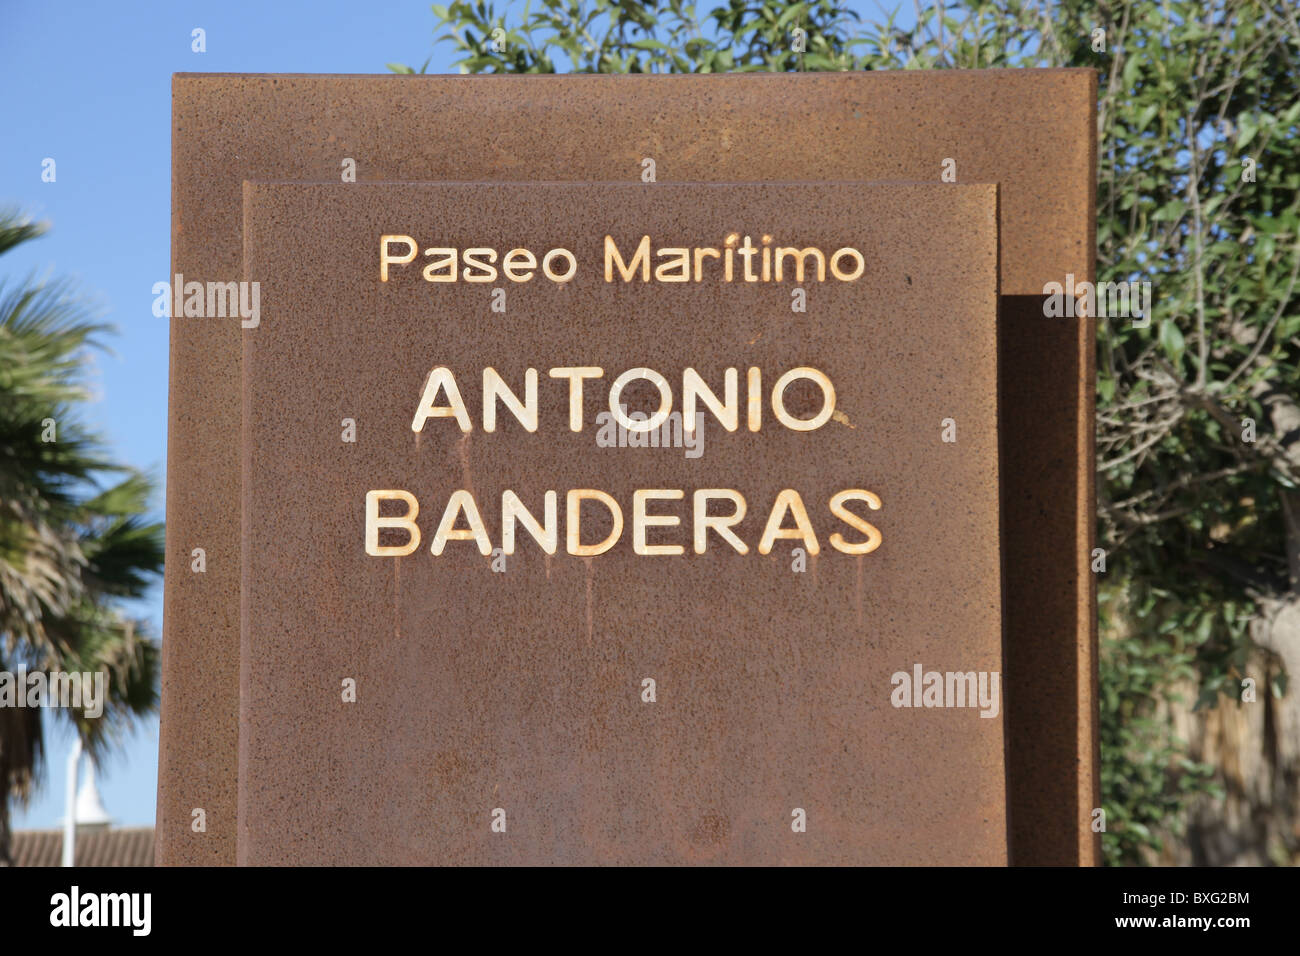 Paseo Maritimo Antonio Banderas in Malaga, Spain Stock Photo